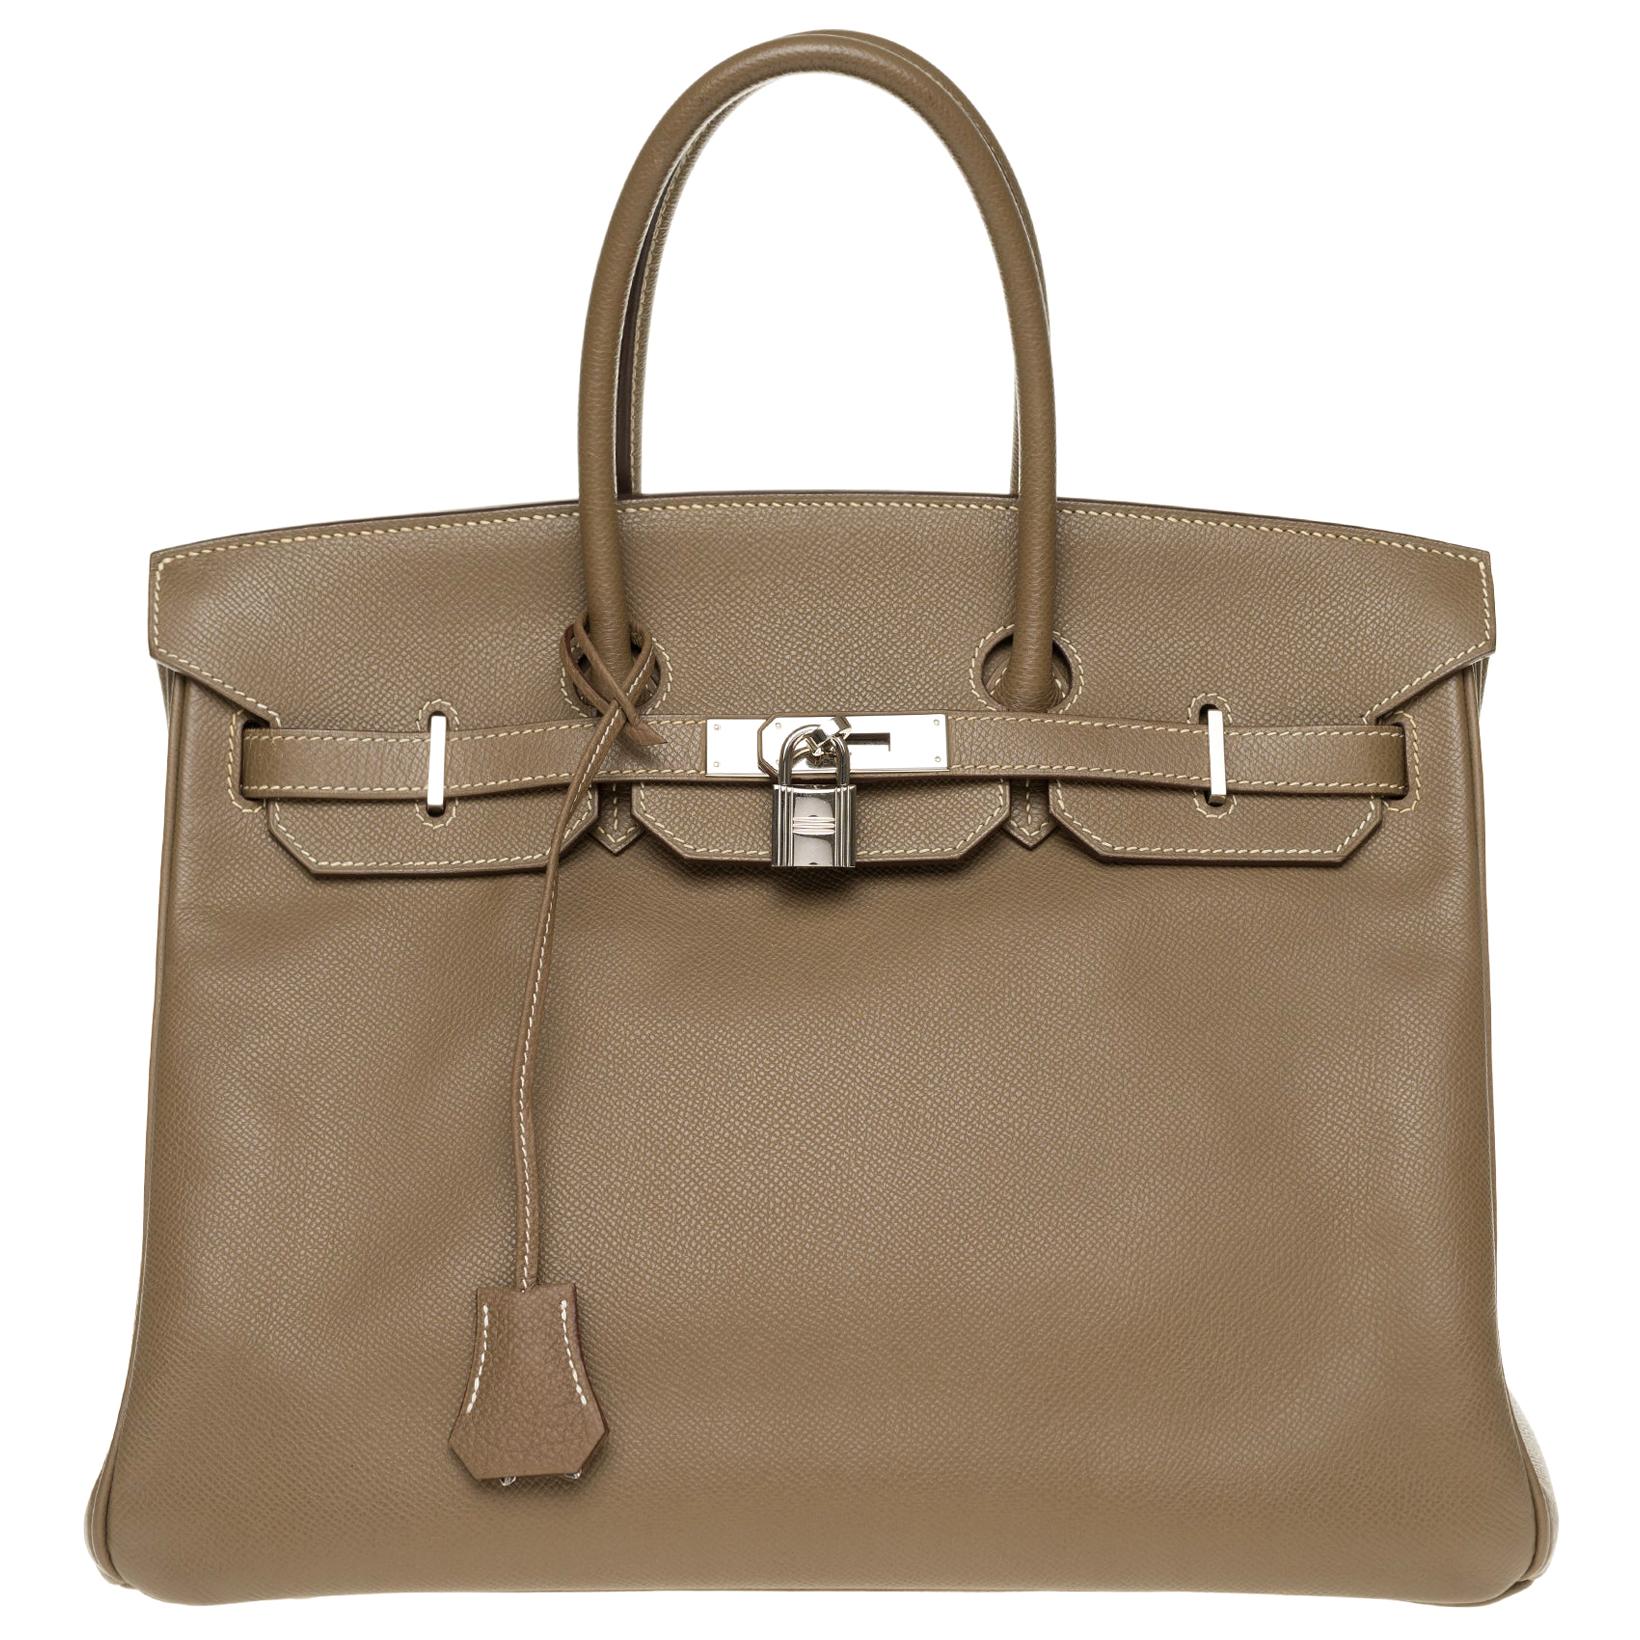 Hermès Birkin 35 handbag in Epsom Etoupe with Silver hardware !